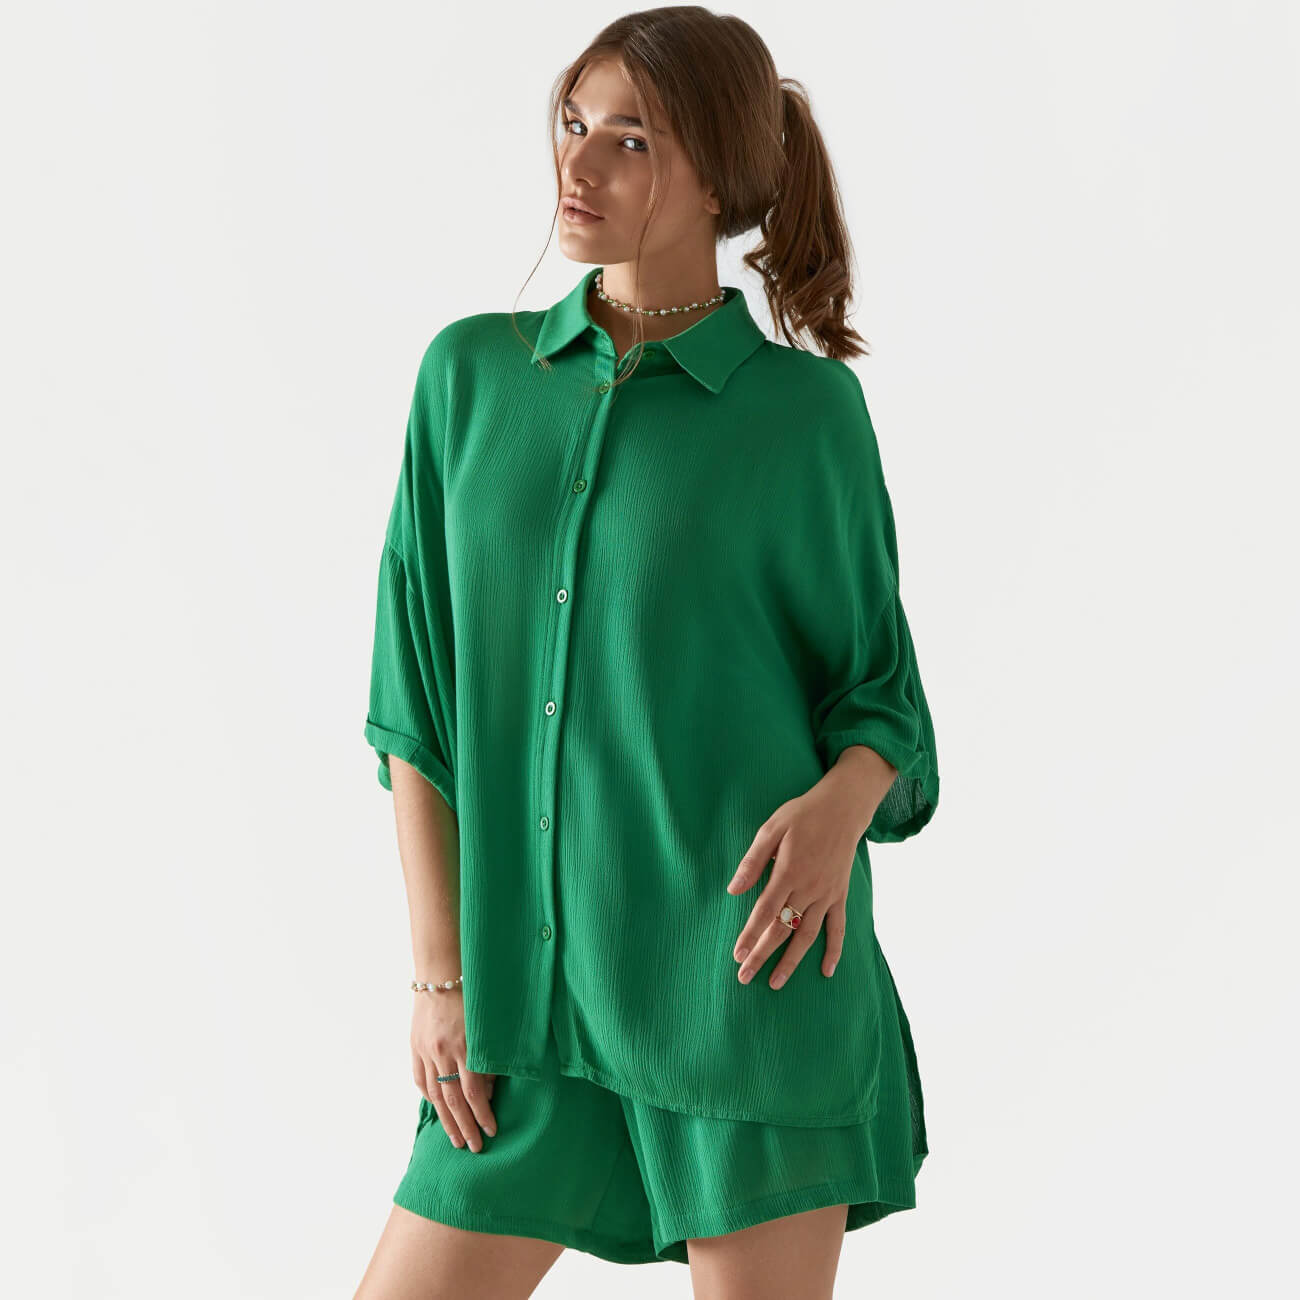 Рубашка женская, р. L, с коротким рукавом, вискоза, зеленая, Julie - фото 1